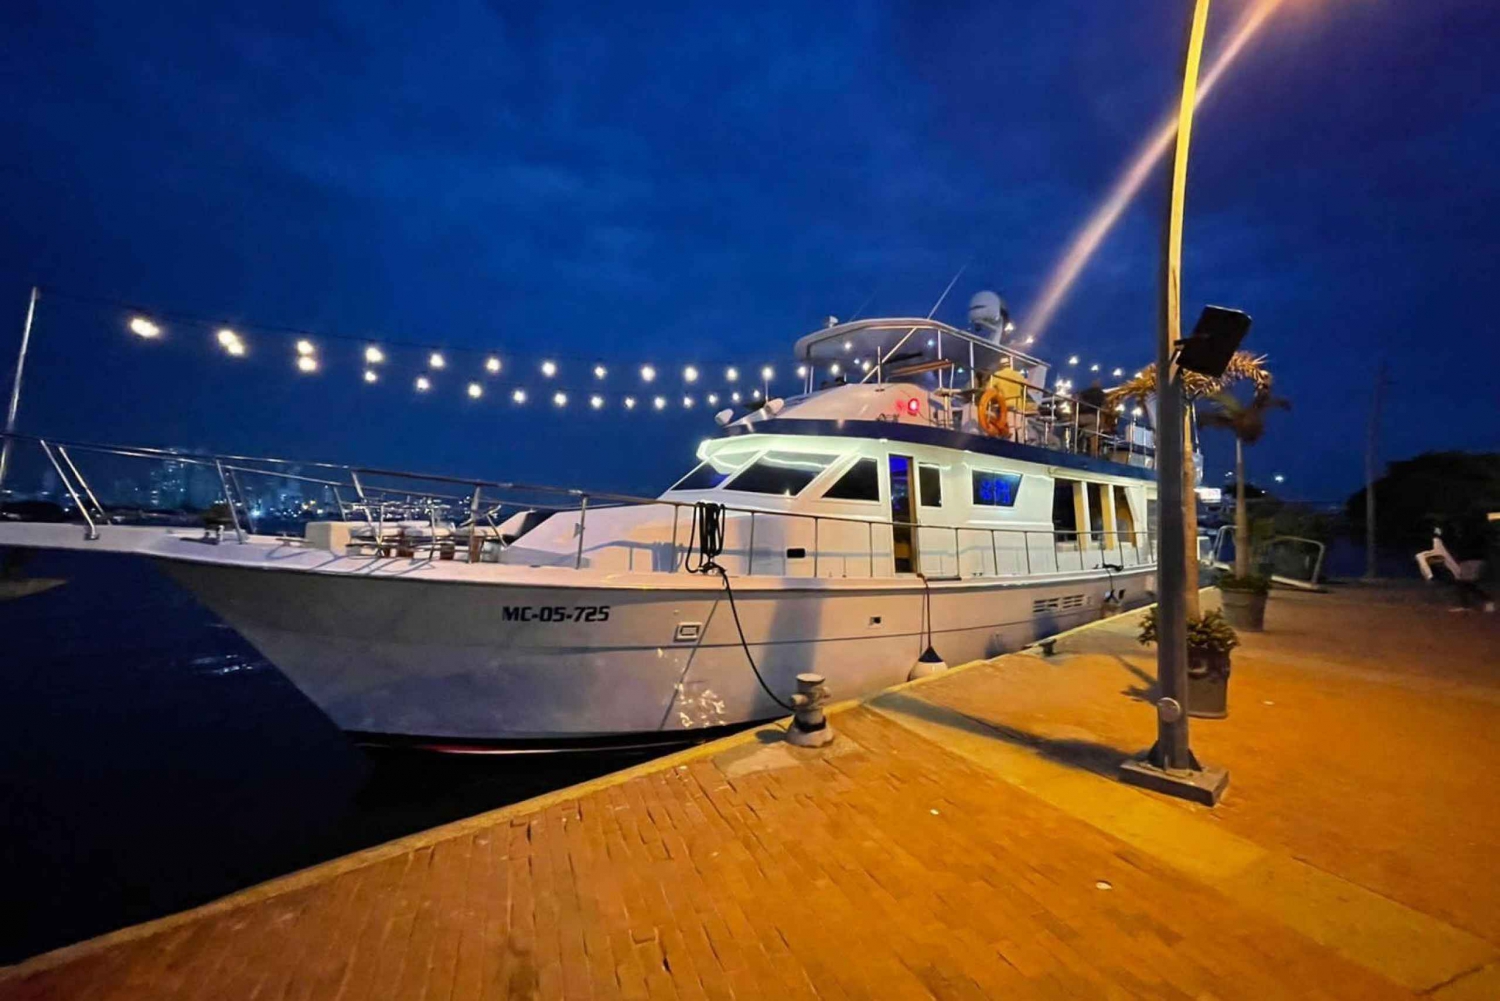 Cartagena: Experiencia culinaria de 4 platos a bordo de un catamarán